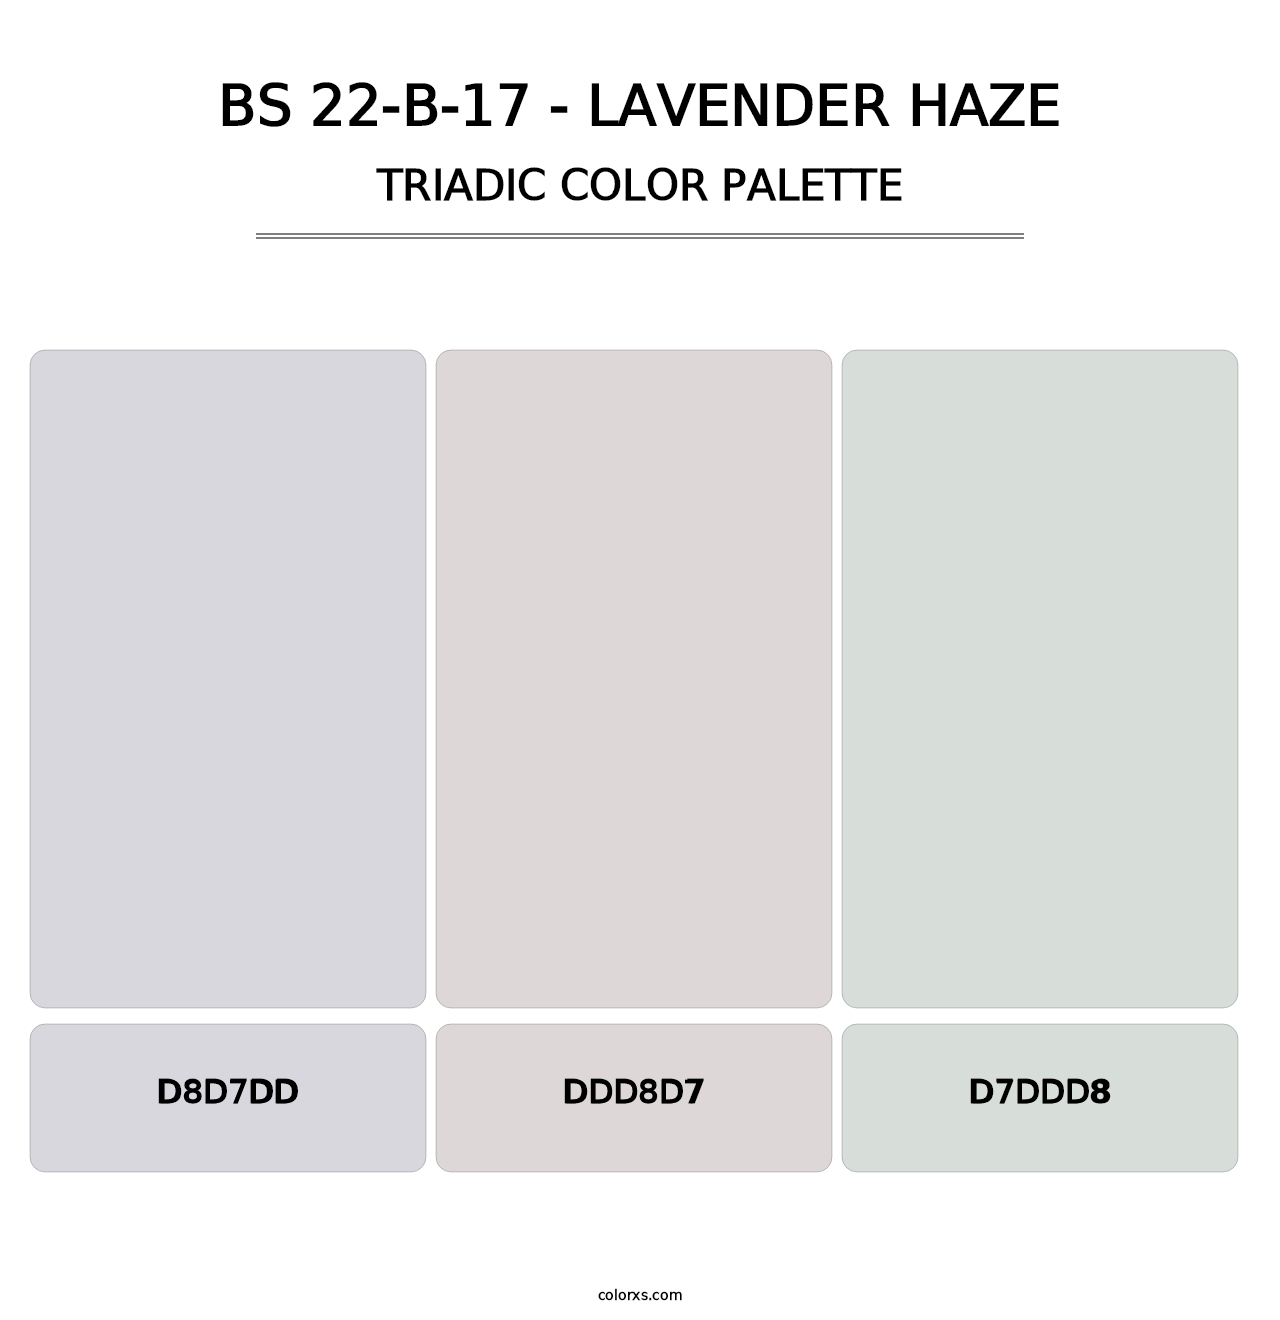 BS 22-B-17 - Lavender Haze - Triadic Color Palette